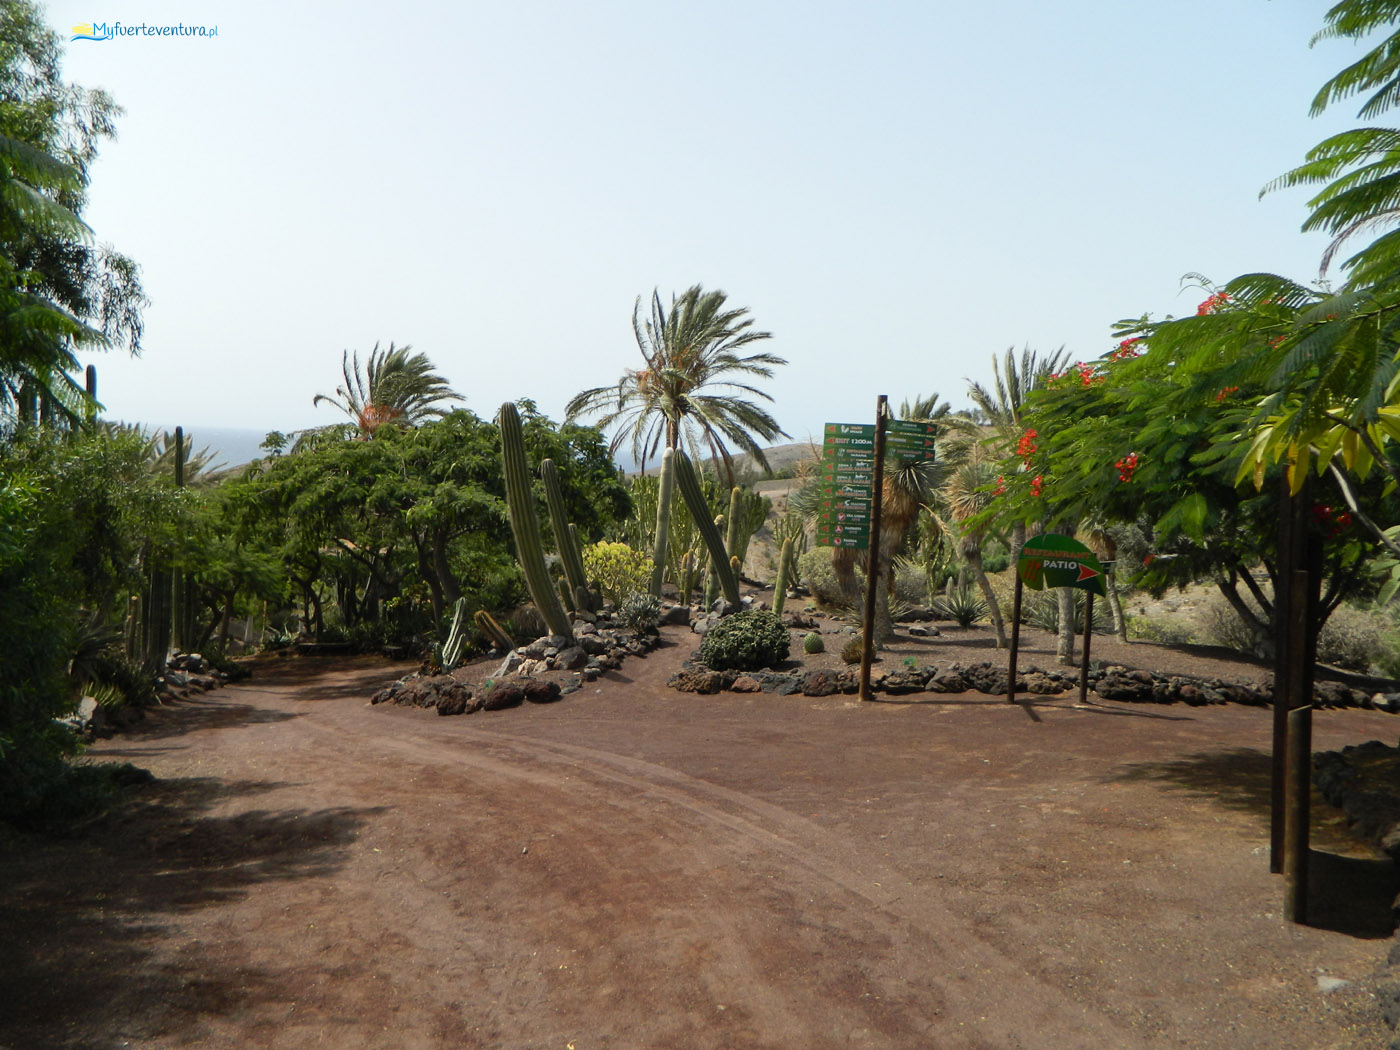 Oasis Park Fuerteventura - pokaz ptaków drapieżnych